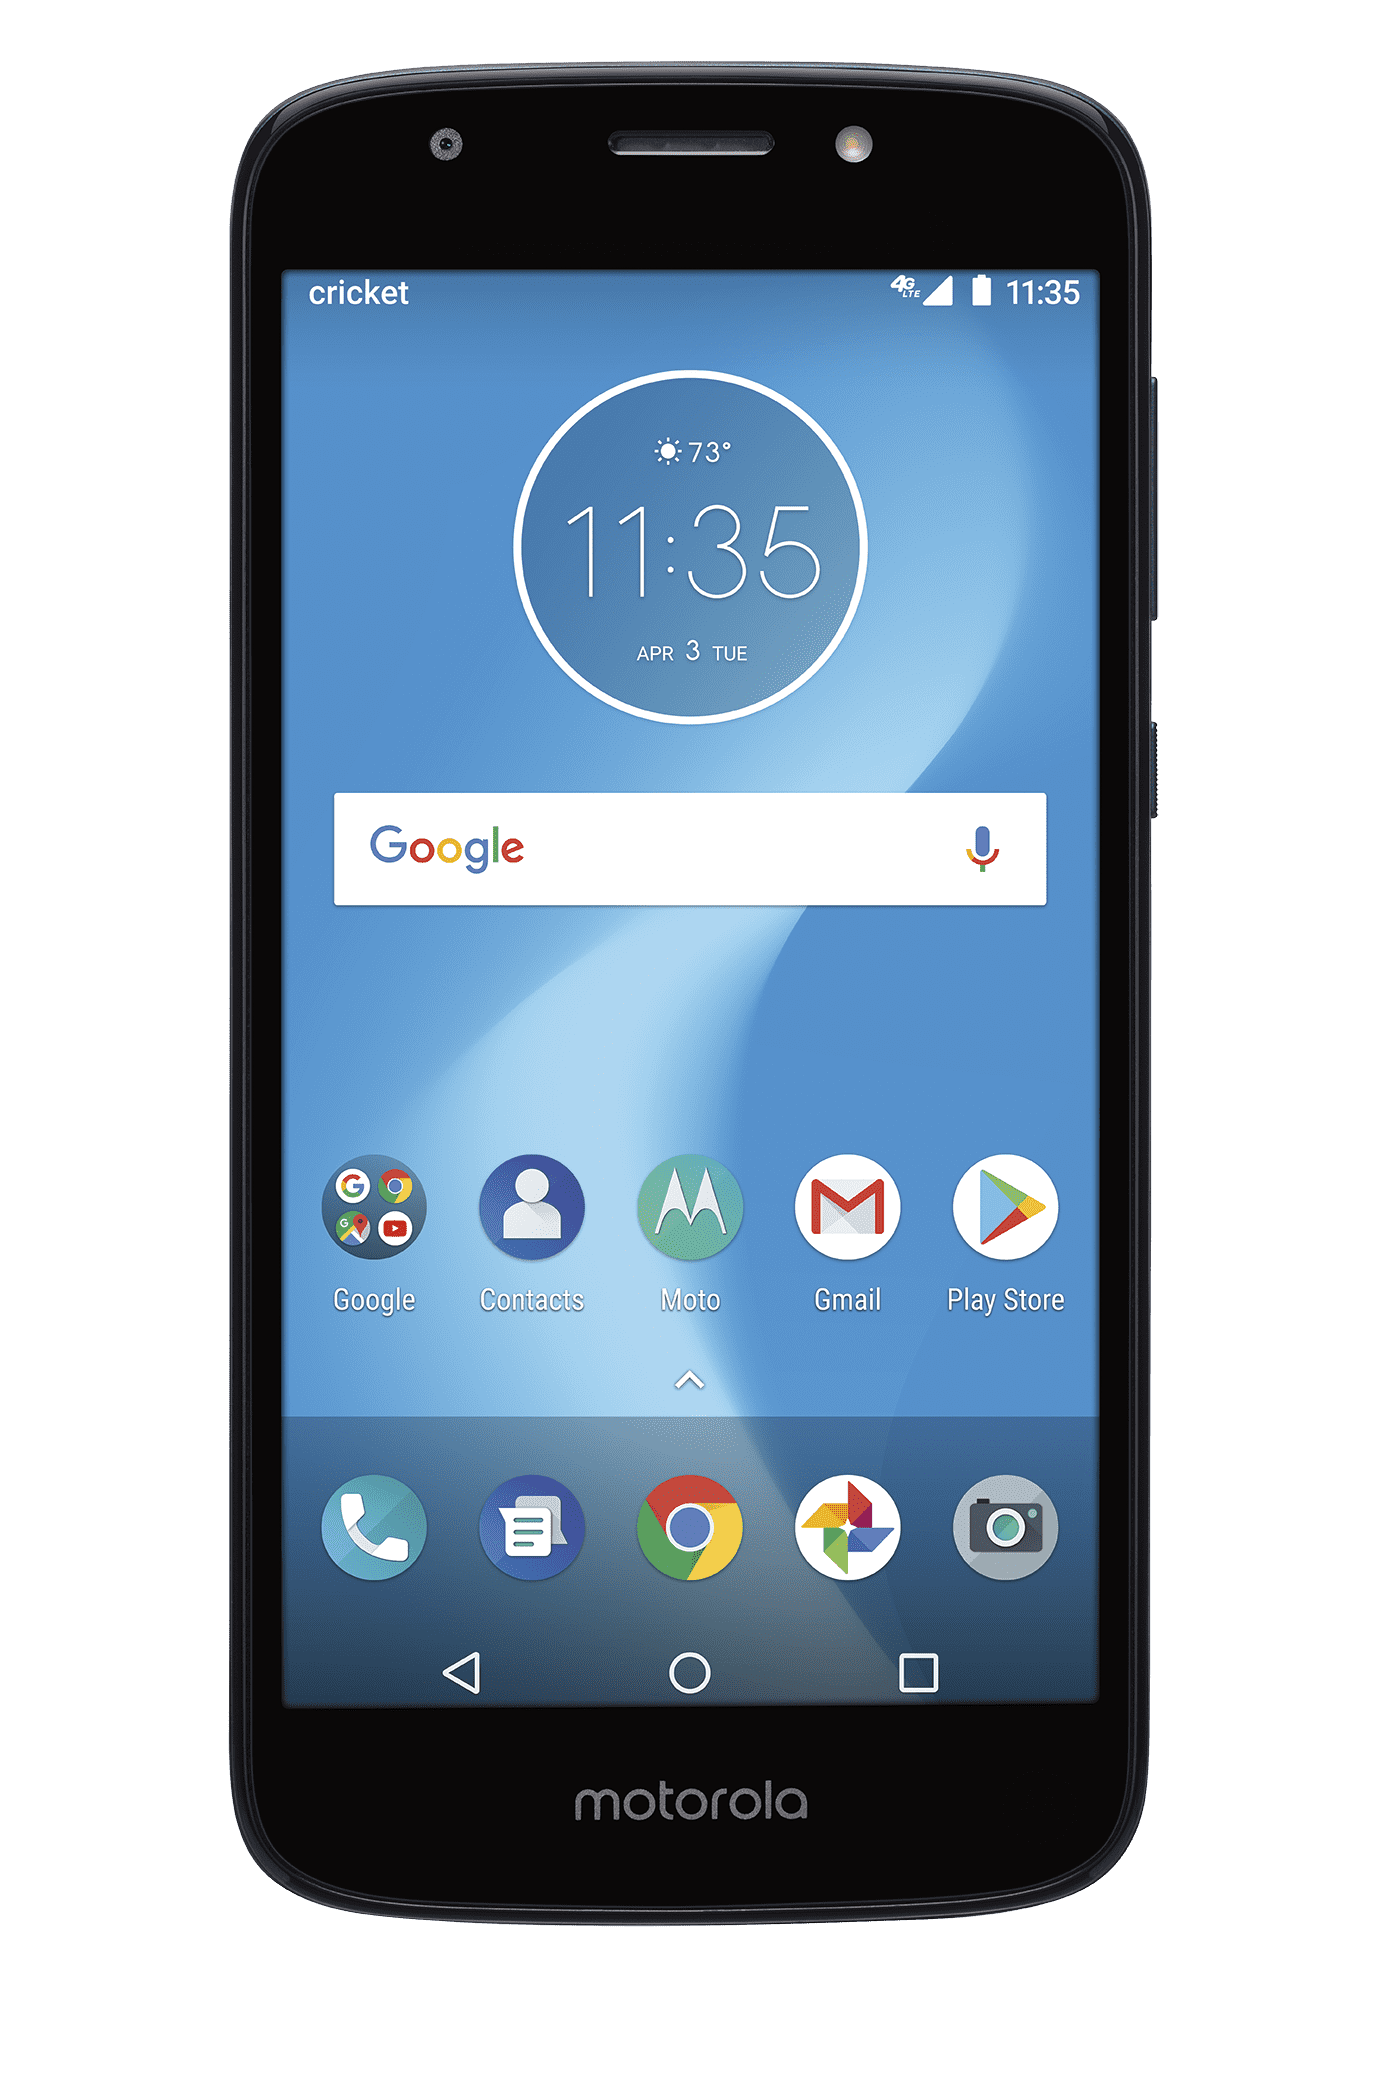 Cricket Wireless Motorola Moto e5 Cruise Prepaid Smartphone